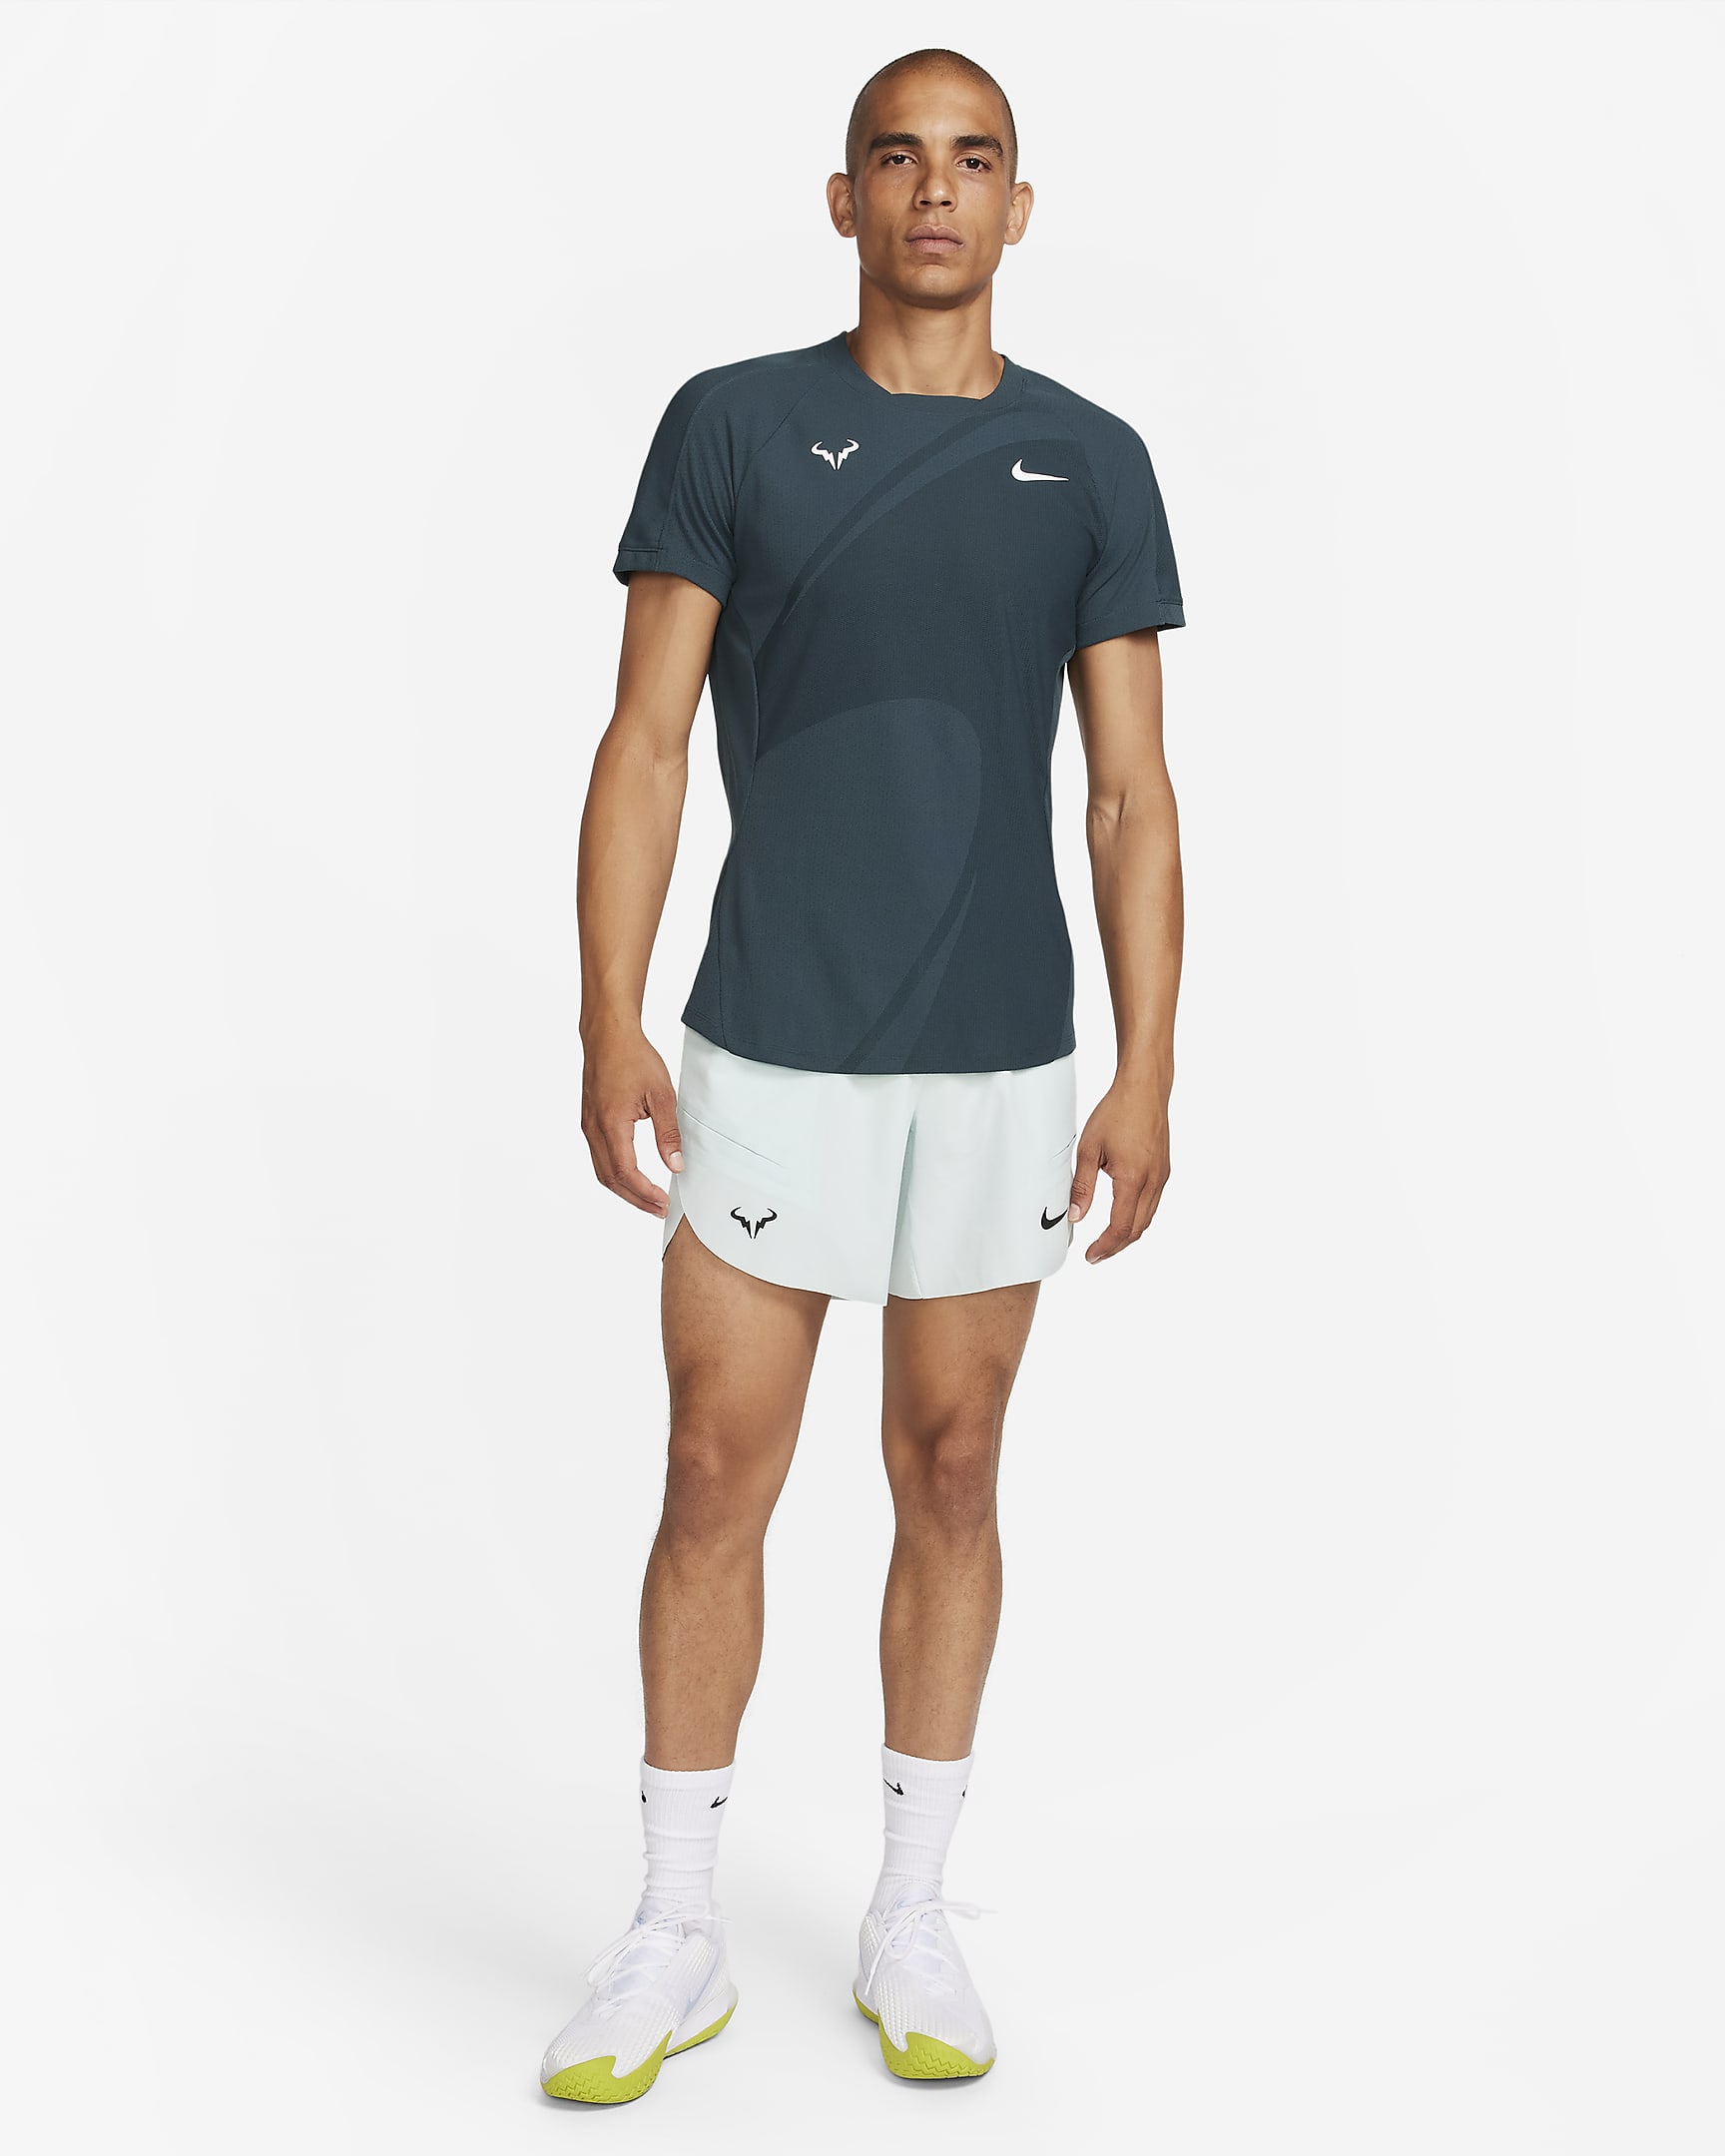 Rafa Men's Nike Dri-FIT ADV Short-Sleeve Tennis Top. Nike AT